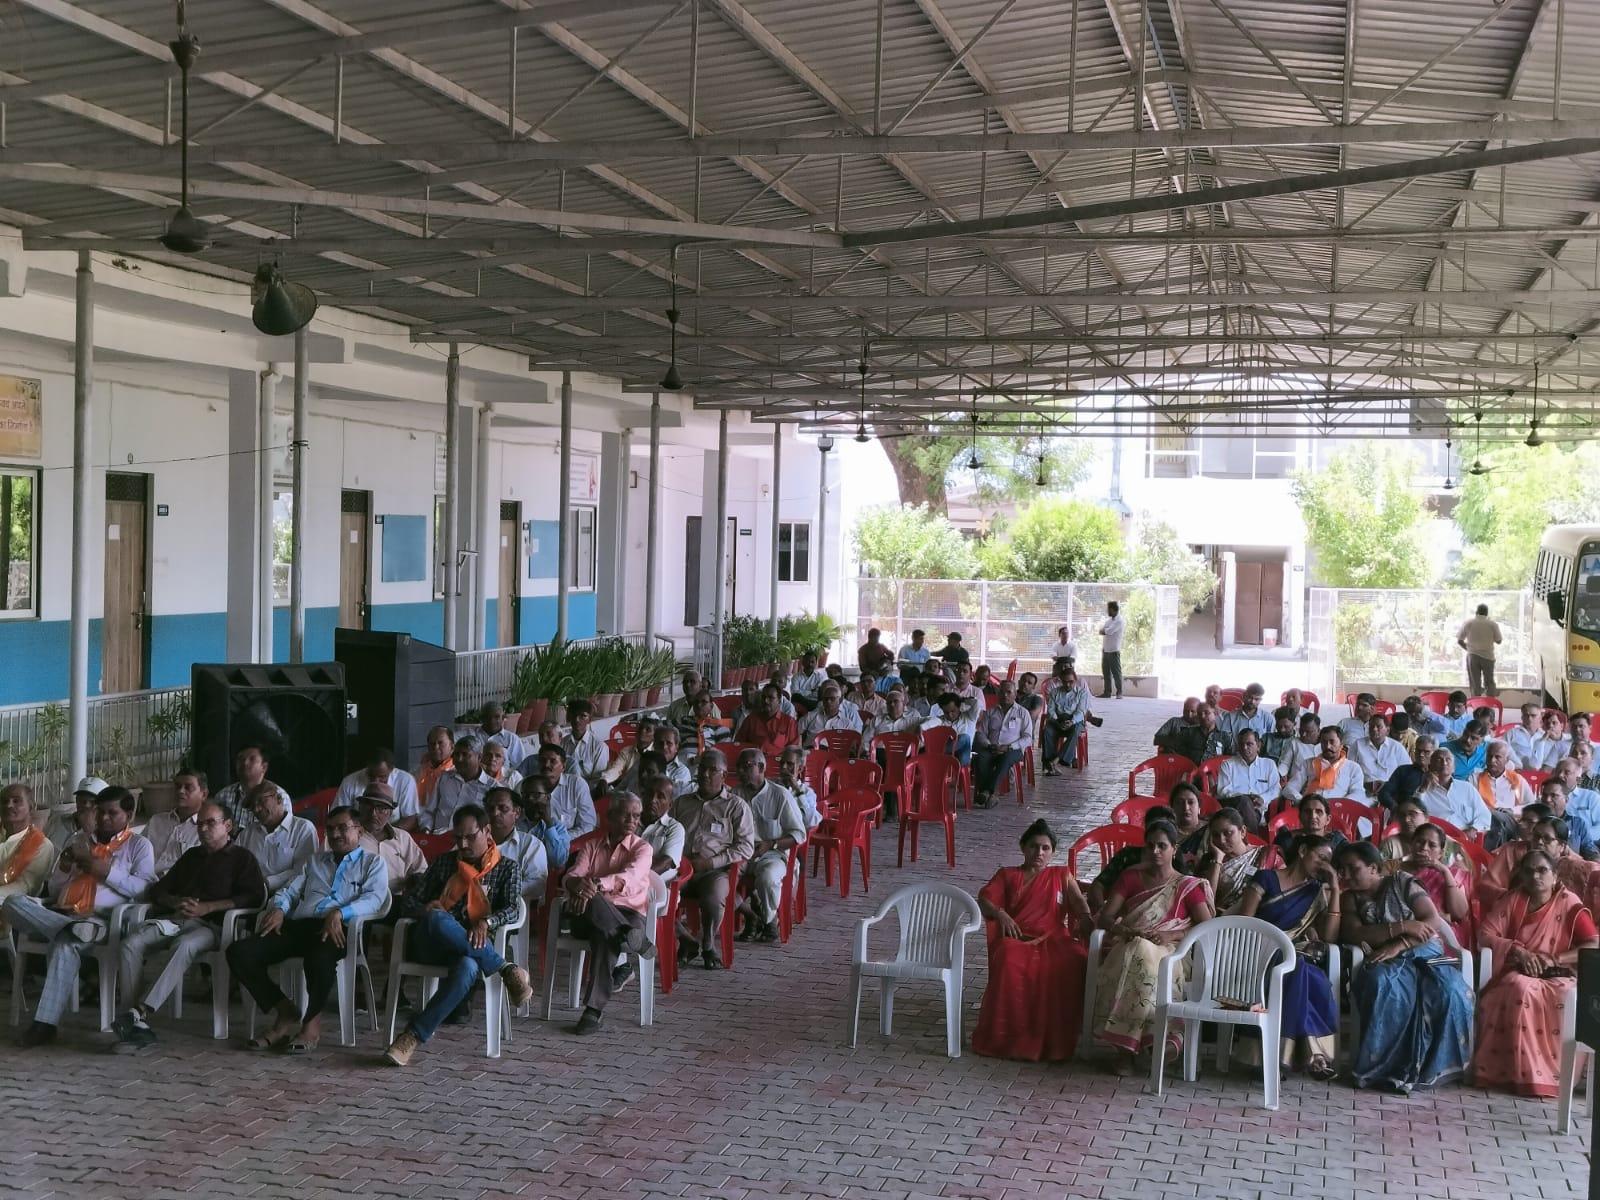 राजस्थान शिक्षक संघ राष्ट्रीय उपशाखा का शुभारंभ व शिक्षक सम्मान समारोह आयोजित